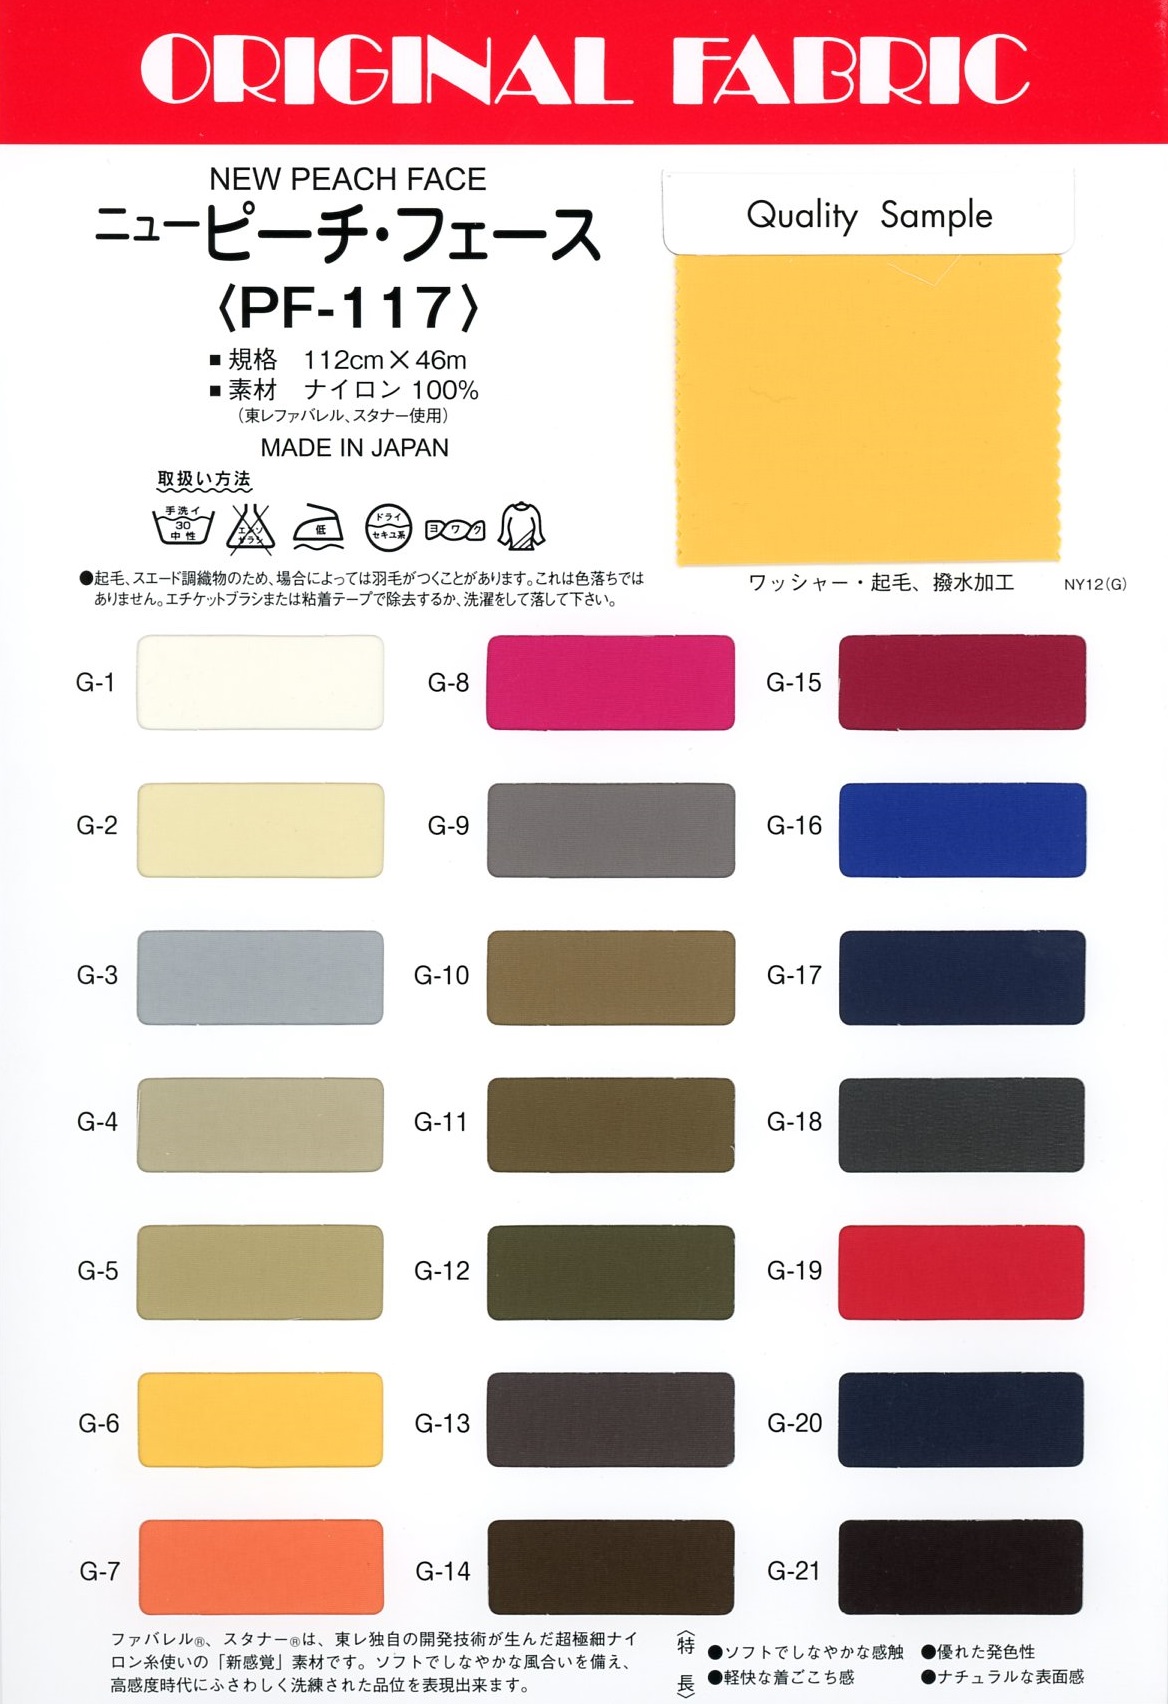 PF117 New Peach Face[Textile / Fabric] Masuda